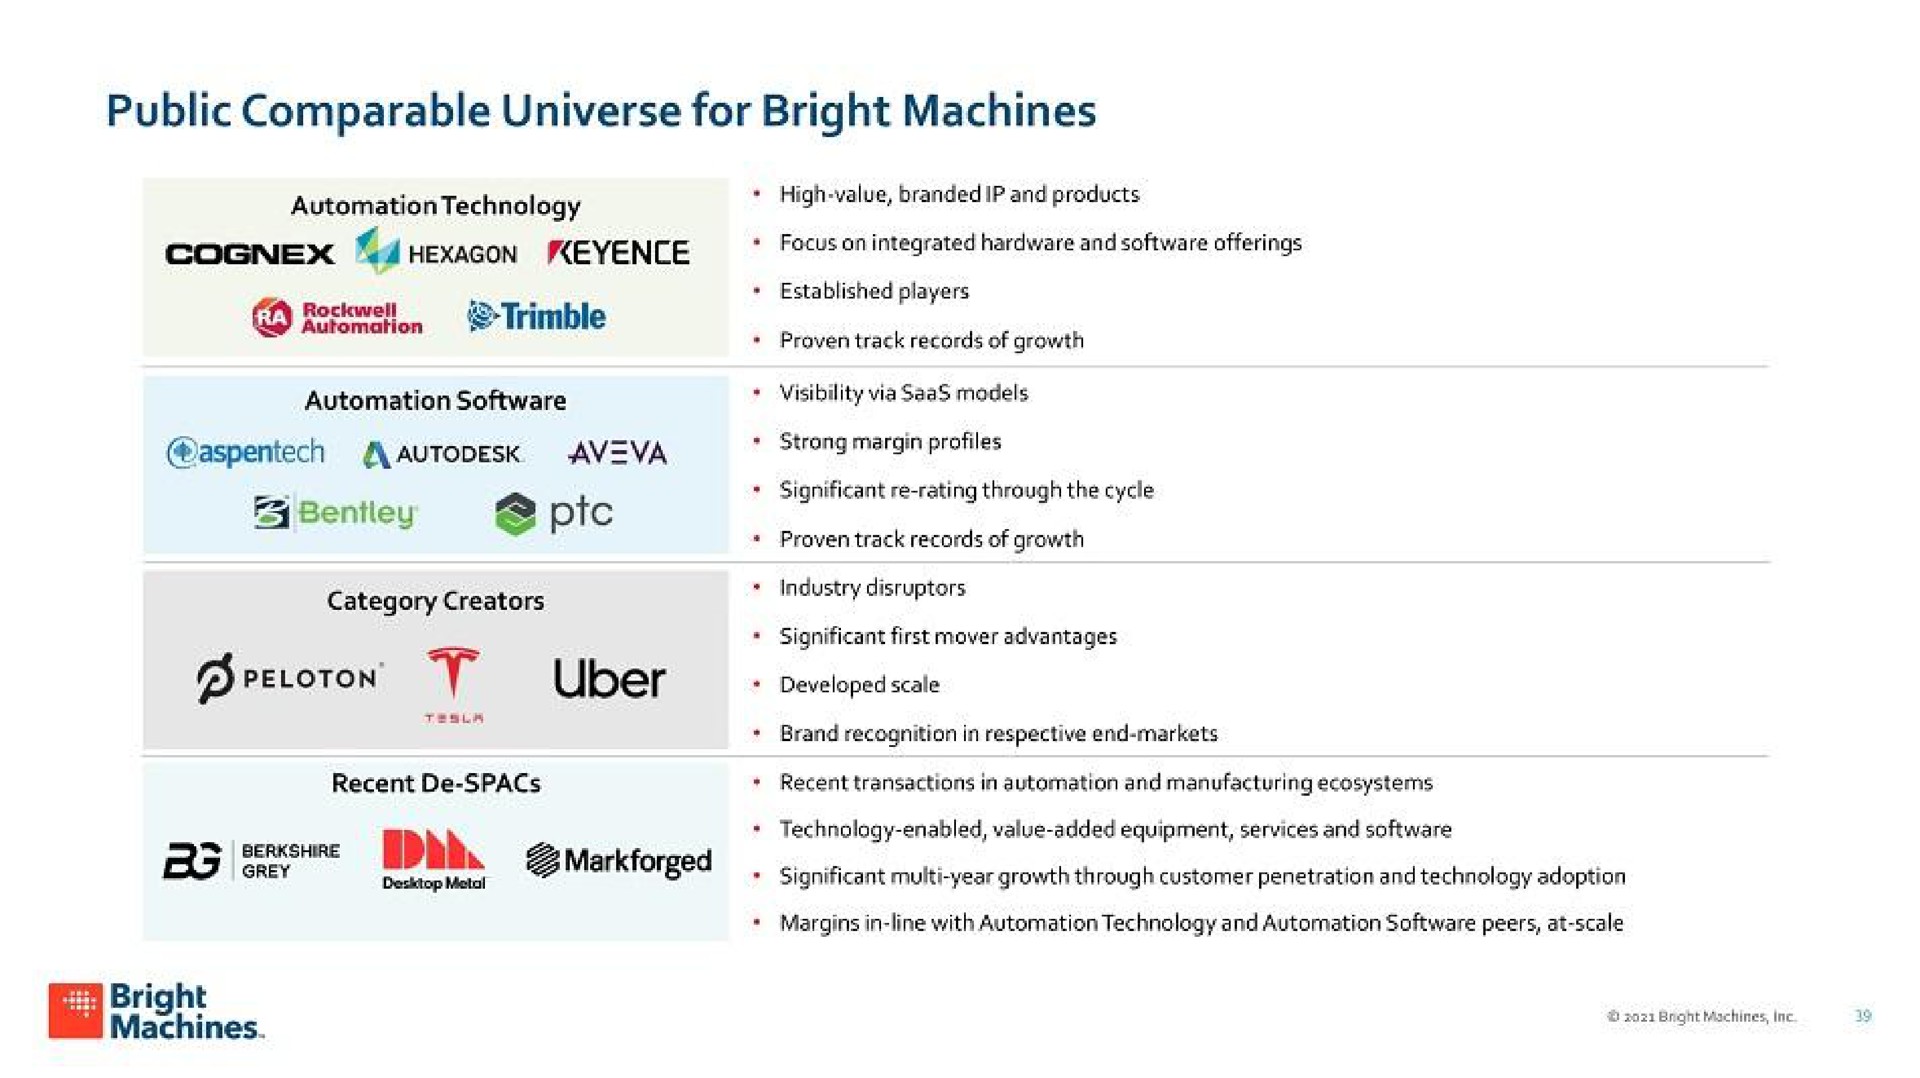 public comparable universe for bright machines pic cay ebb bright | Bright Machines